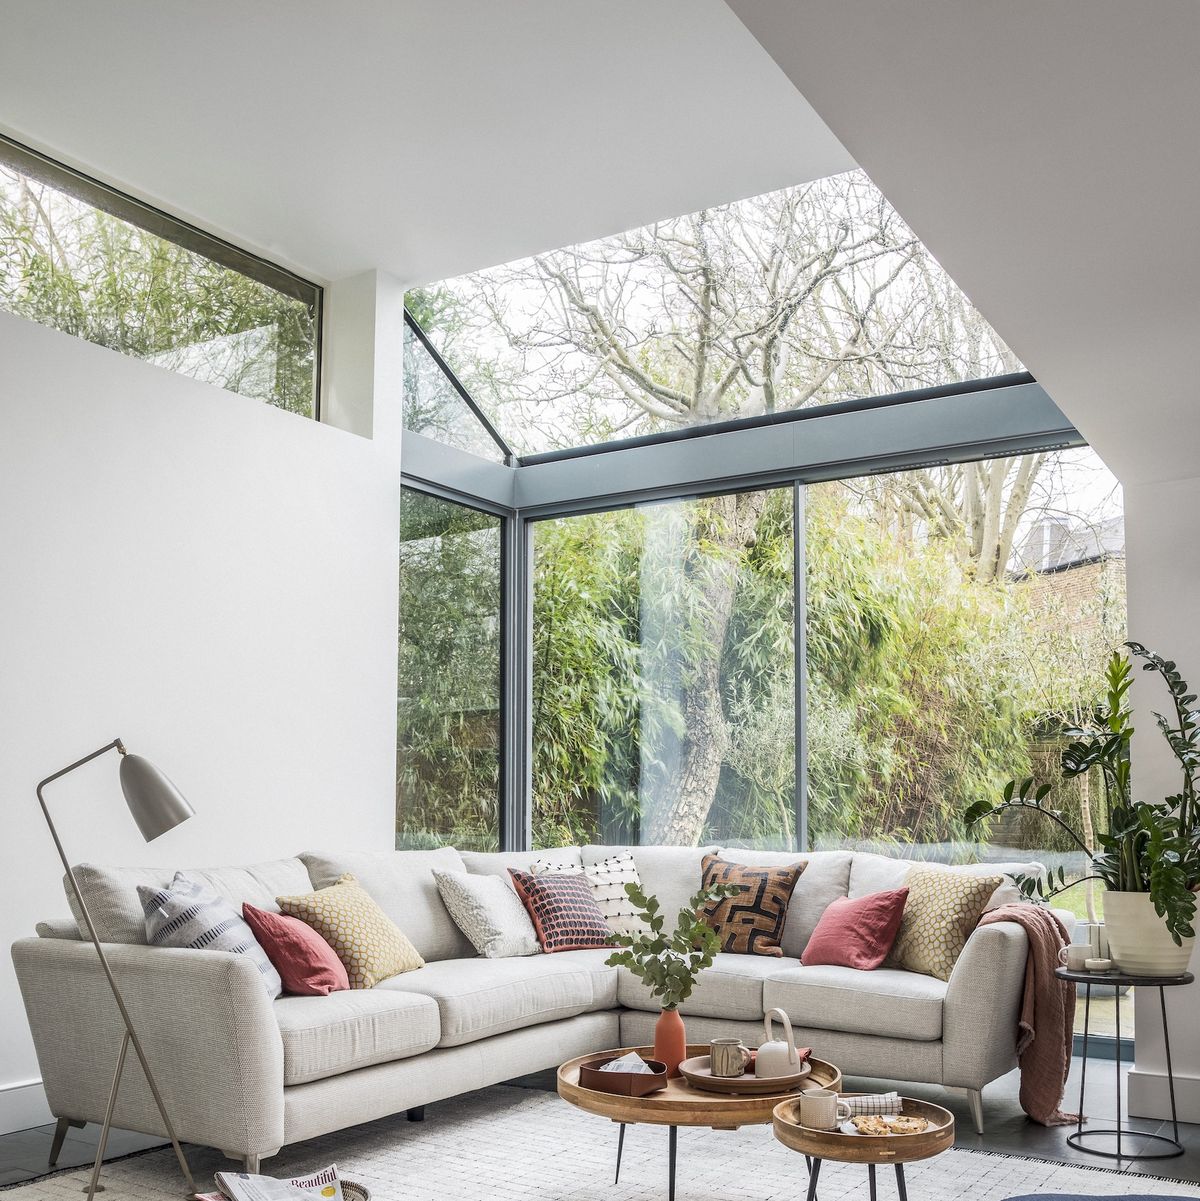 DFS Sublime Extra Large Corner Sofa 😍 - Willow Interiors